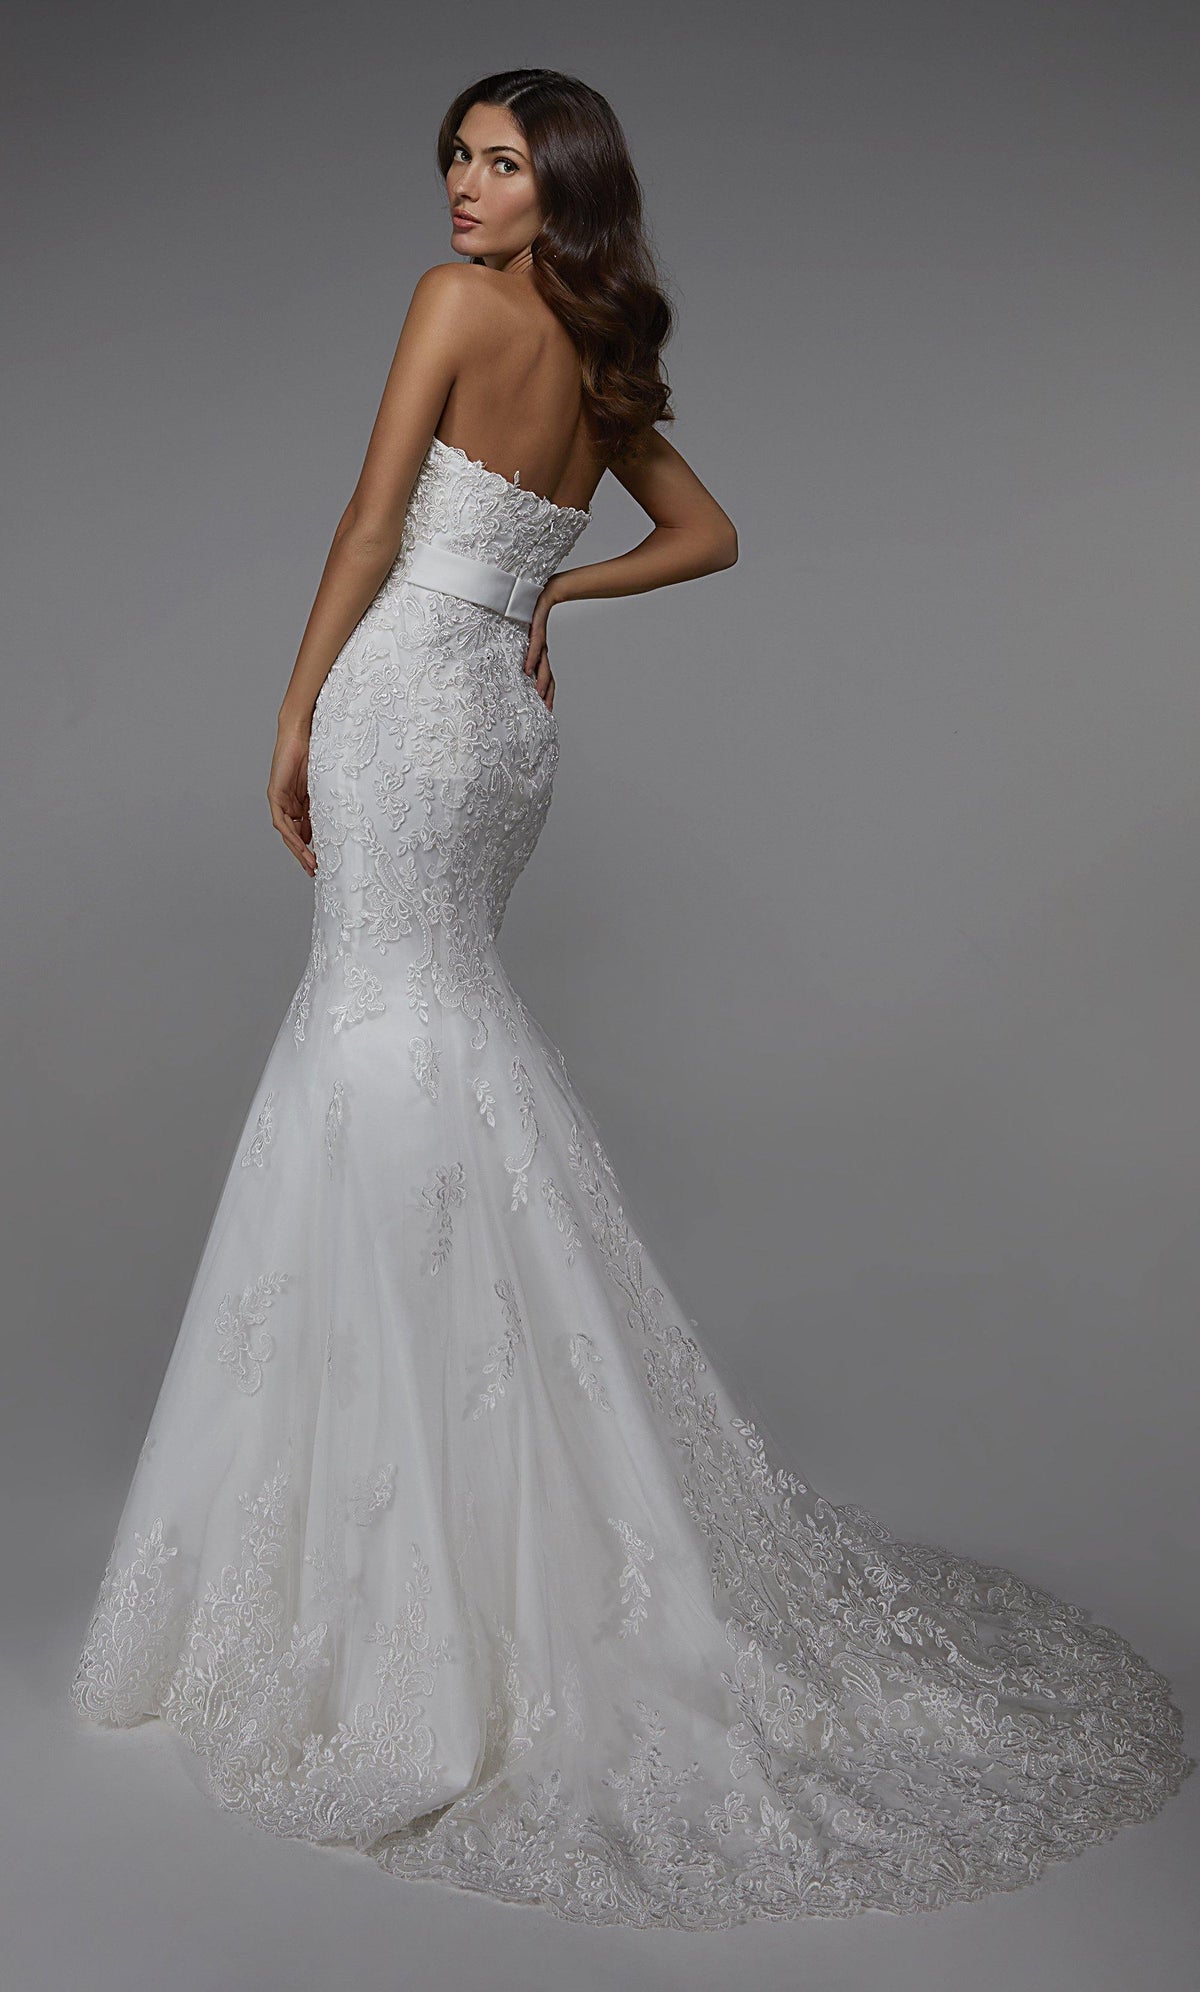 Formal Dress: 7032. Long Wedding Dress, Strapless, Mermaid Alyce Paris